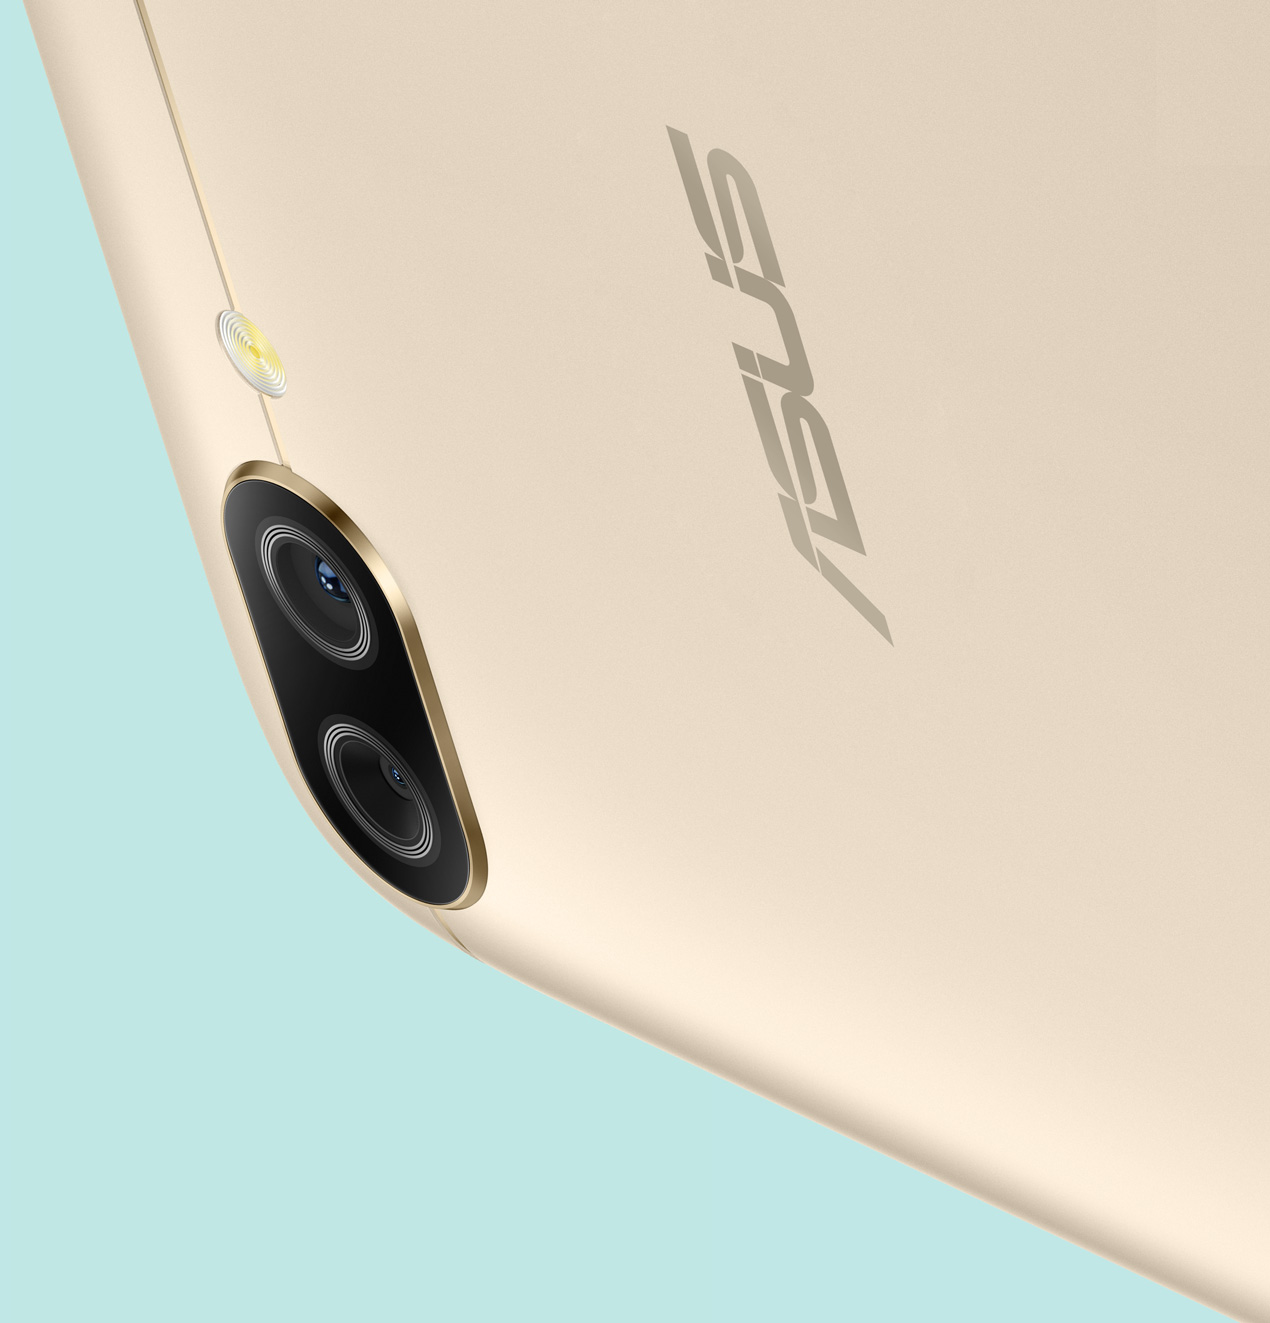 Asus Zenfone 4 Max Zc554kl Smartphone Review Notebookcheck Net Reviews